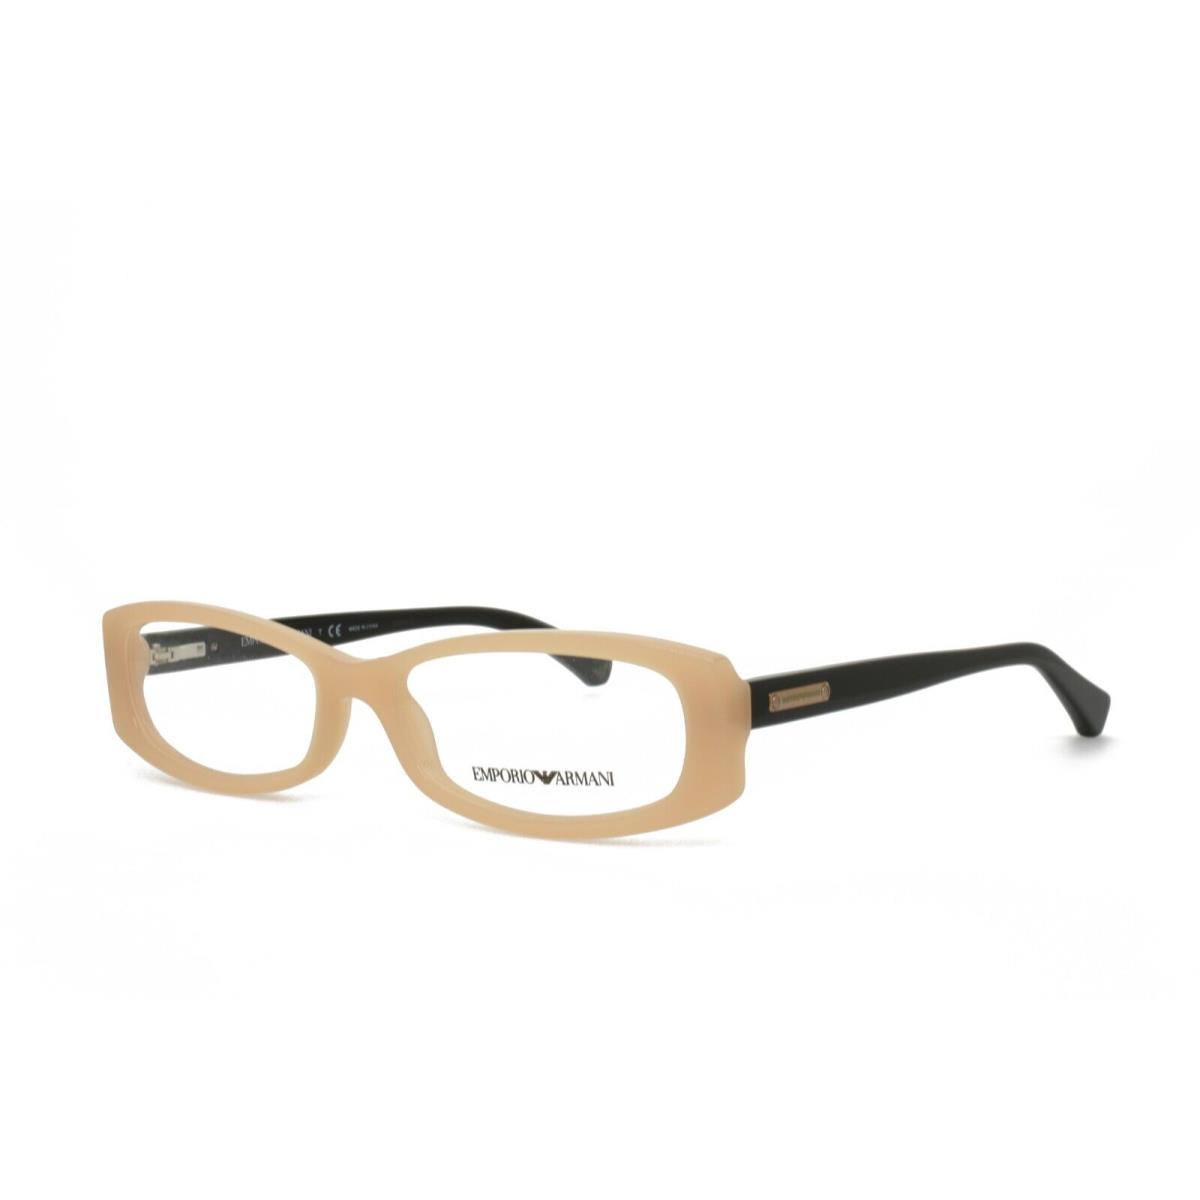 Emporio Armani 3007 5087 53-16-140 Biege Eyeglasses Frames